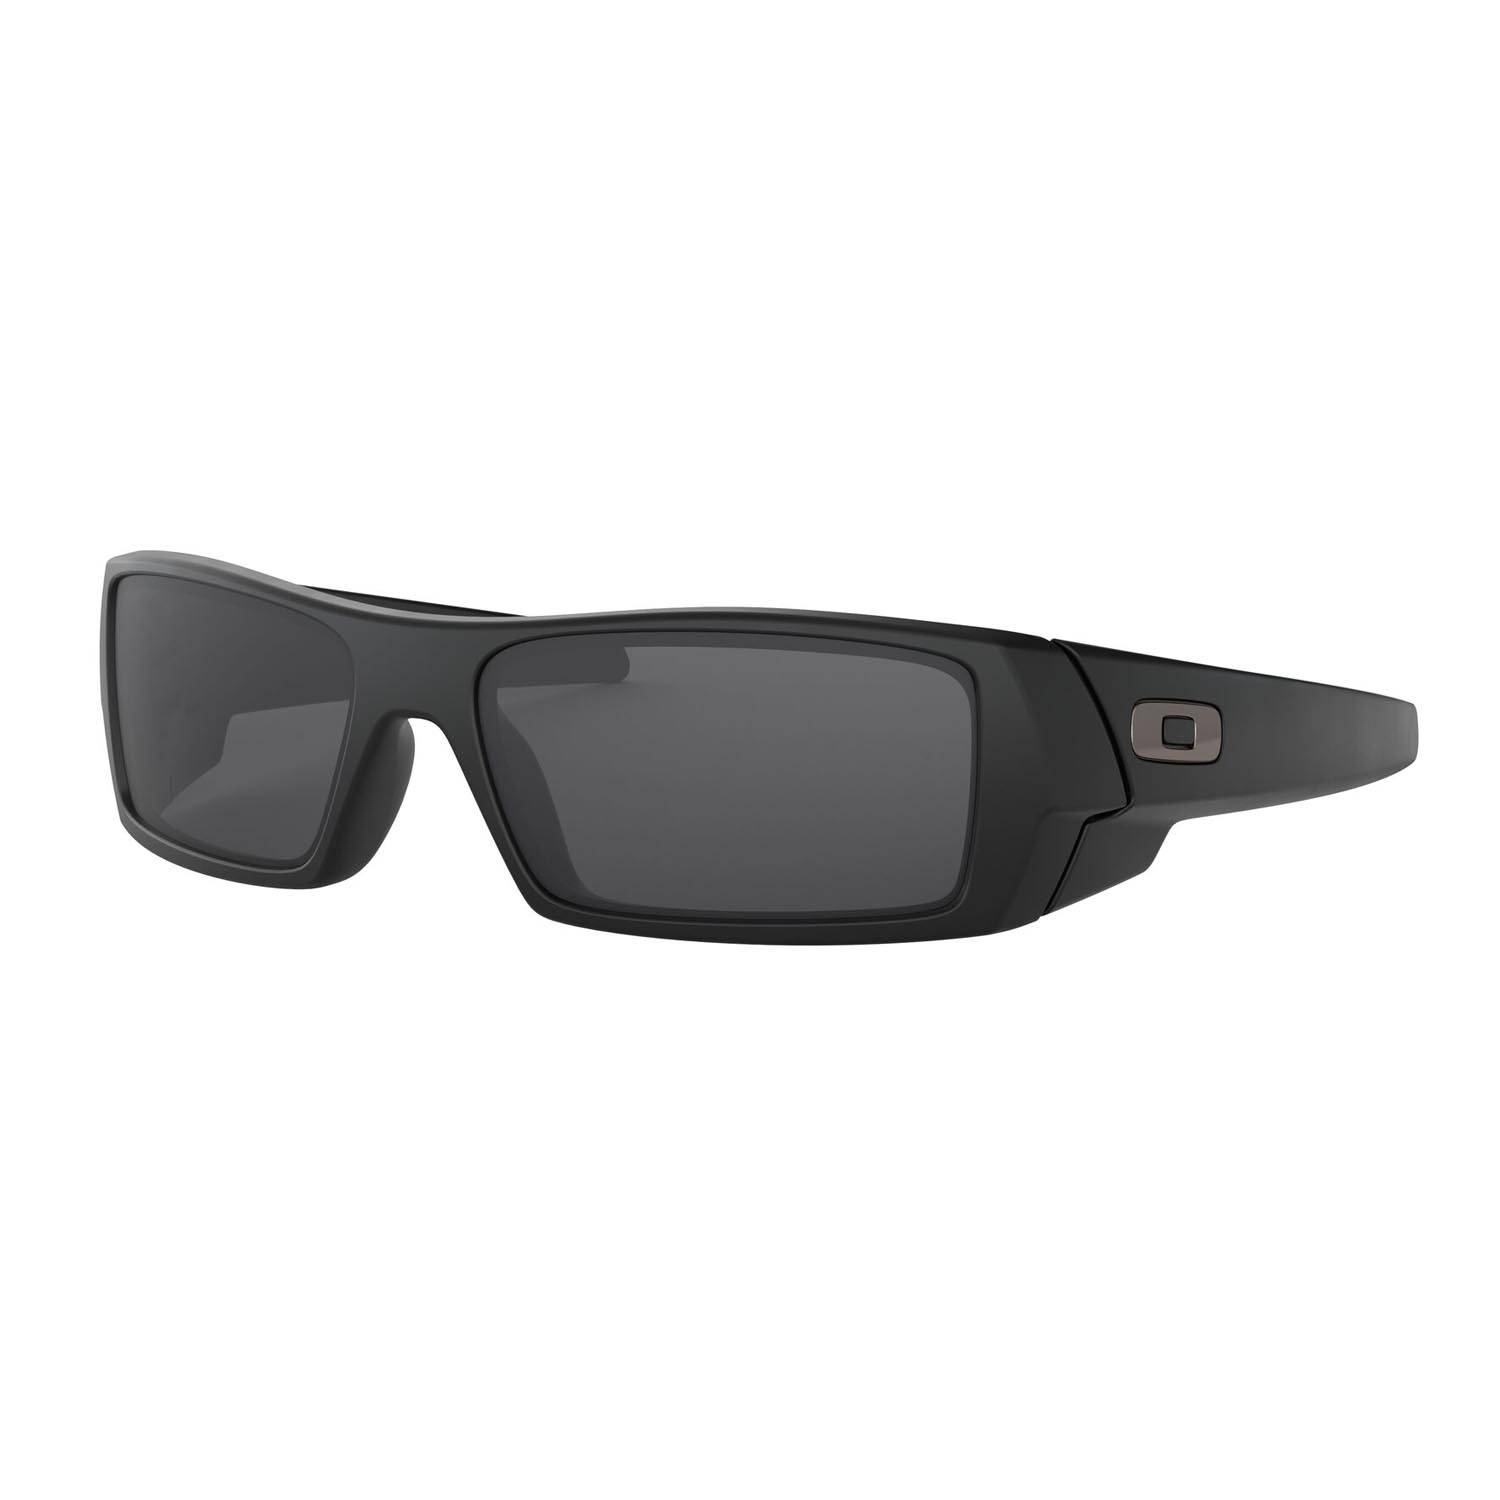 Oakley Gascan Sunglasses with Matte Black Frame, Grey Lenses